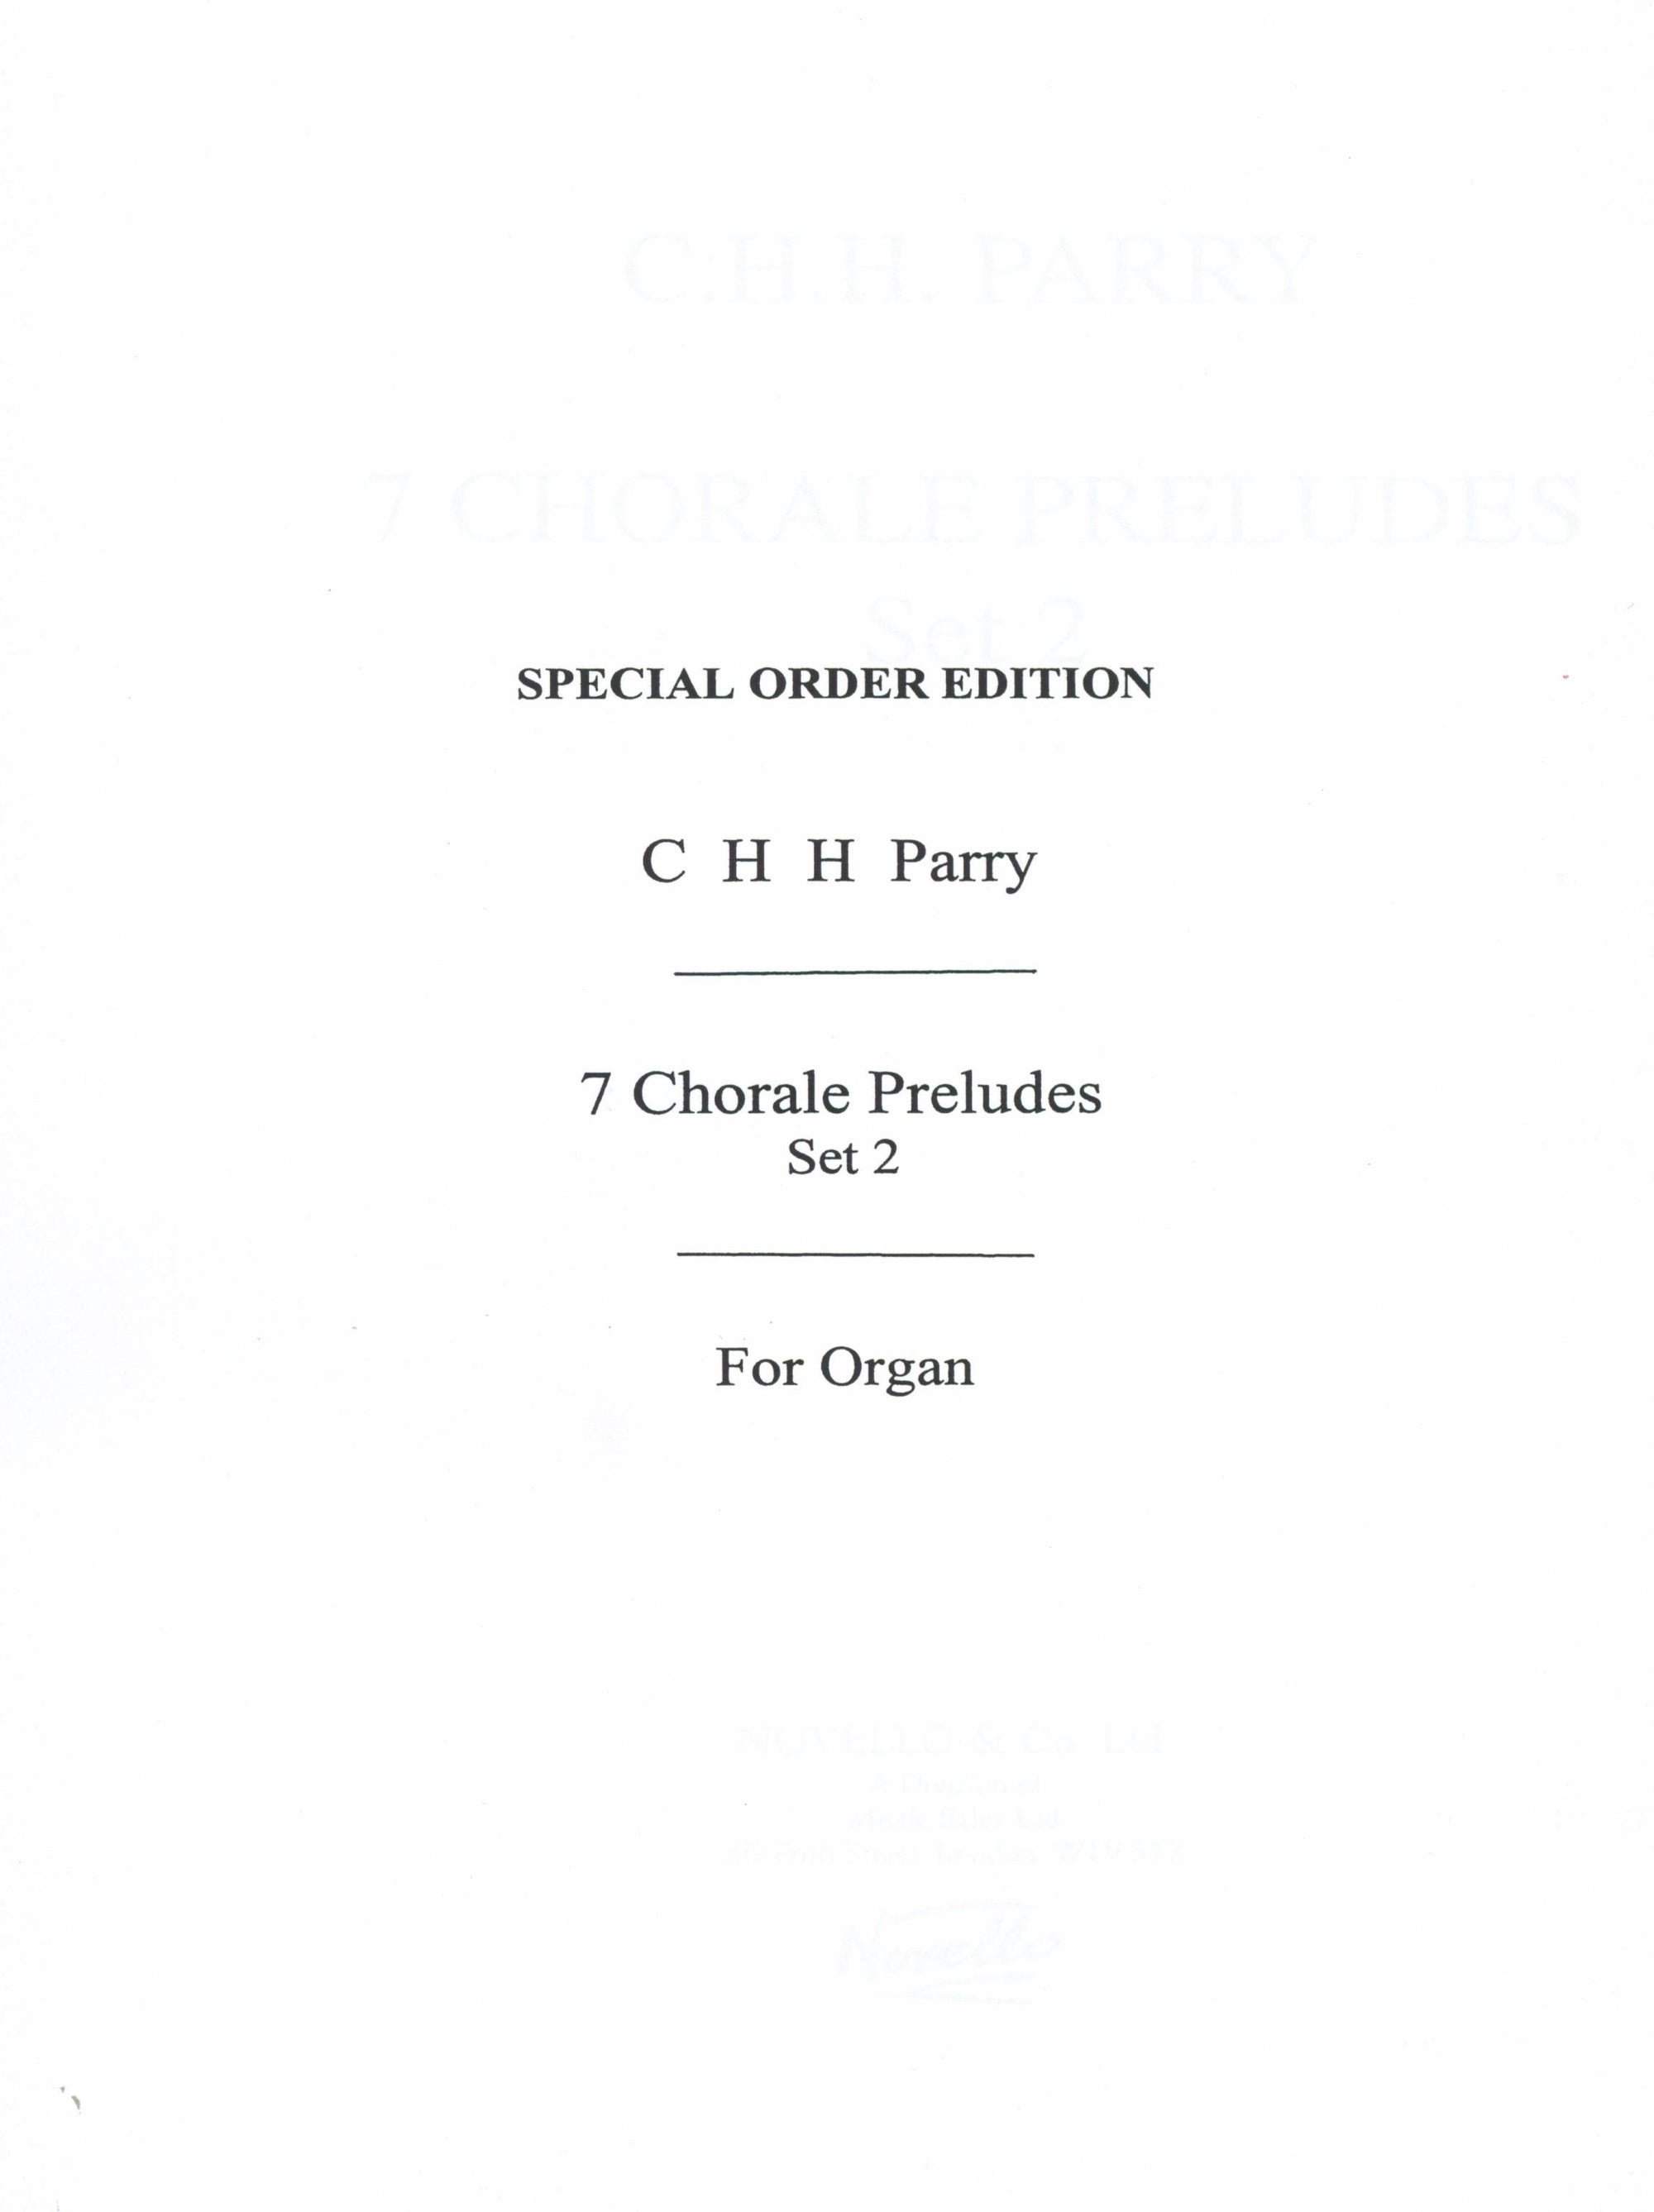 Parry: 7 Chorale Preludes - Set 2